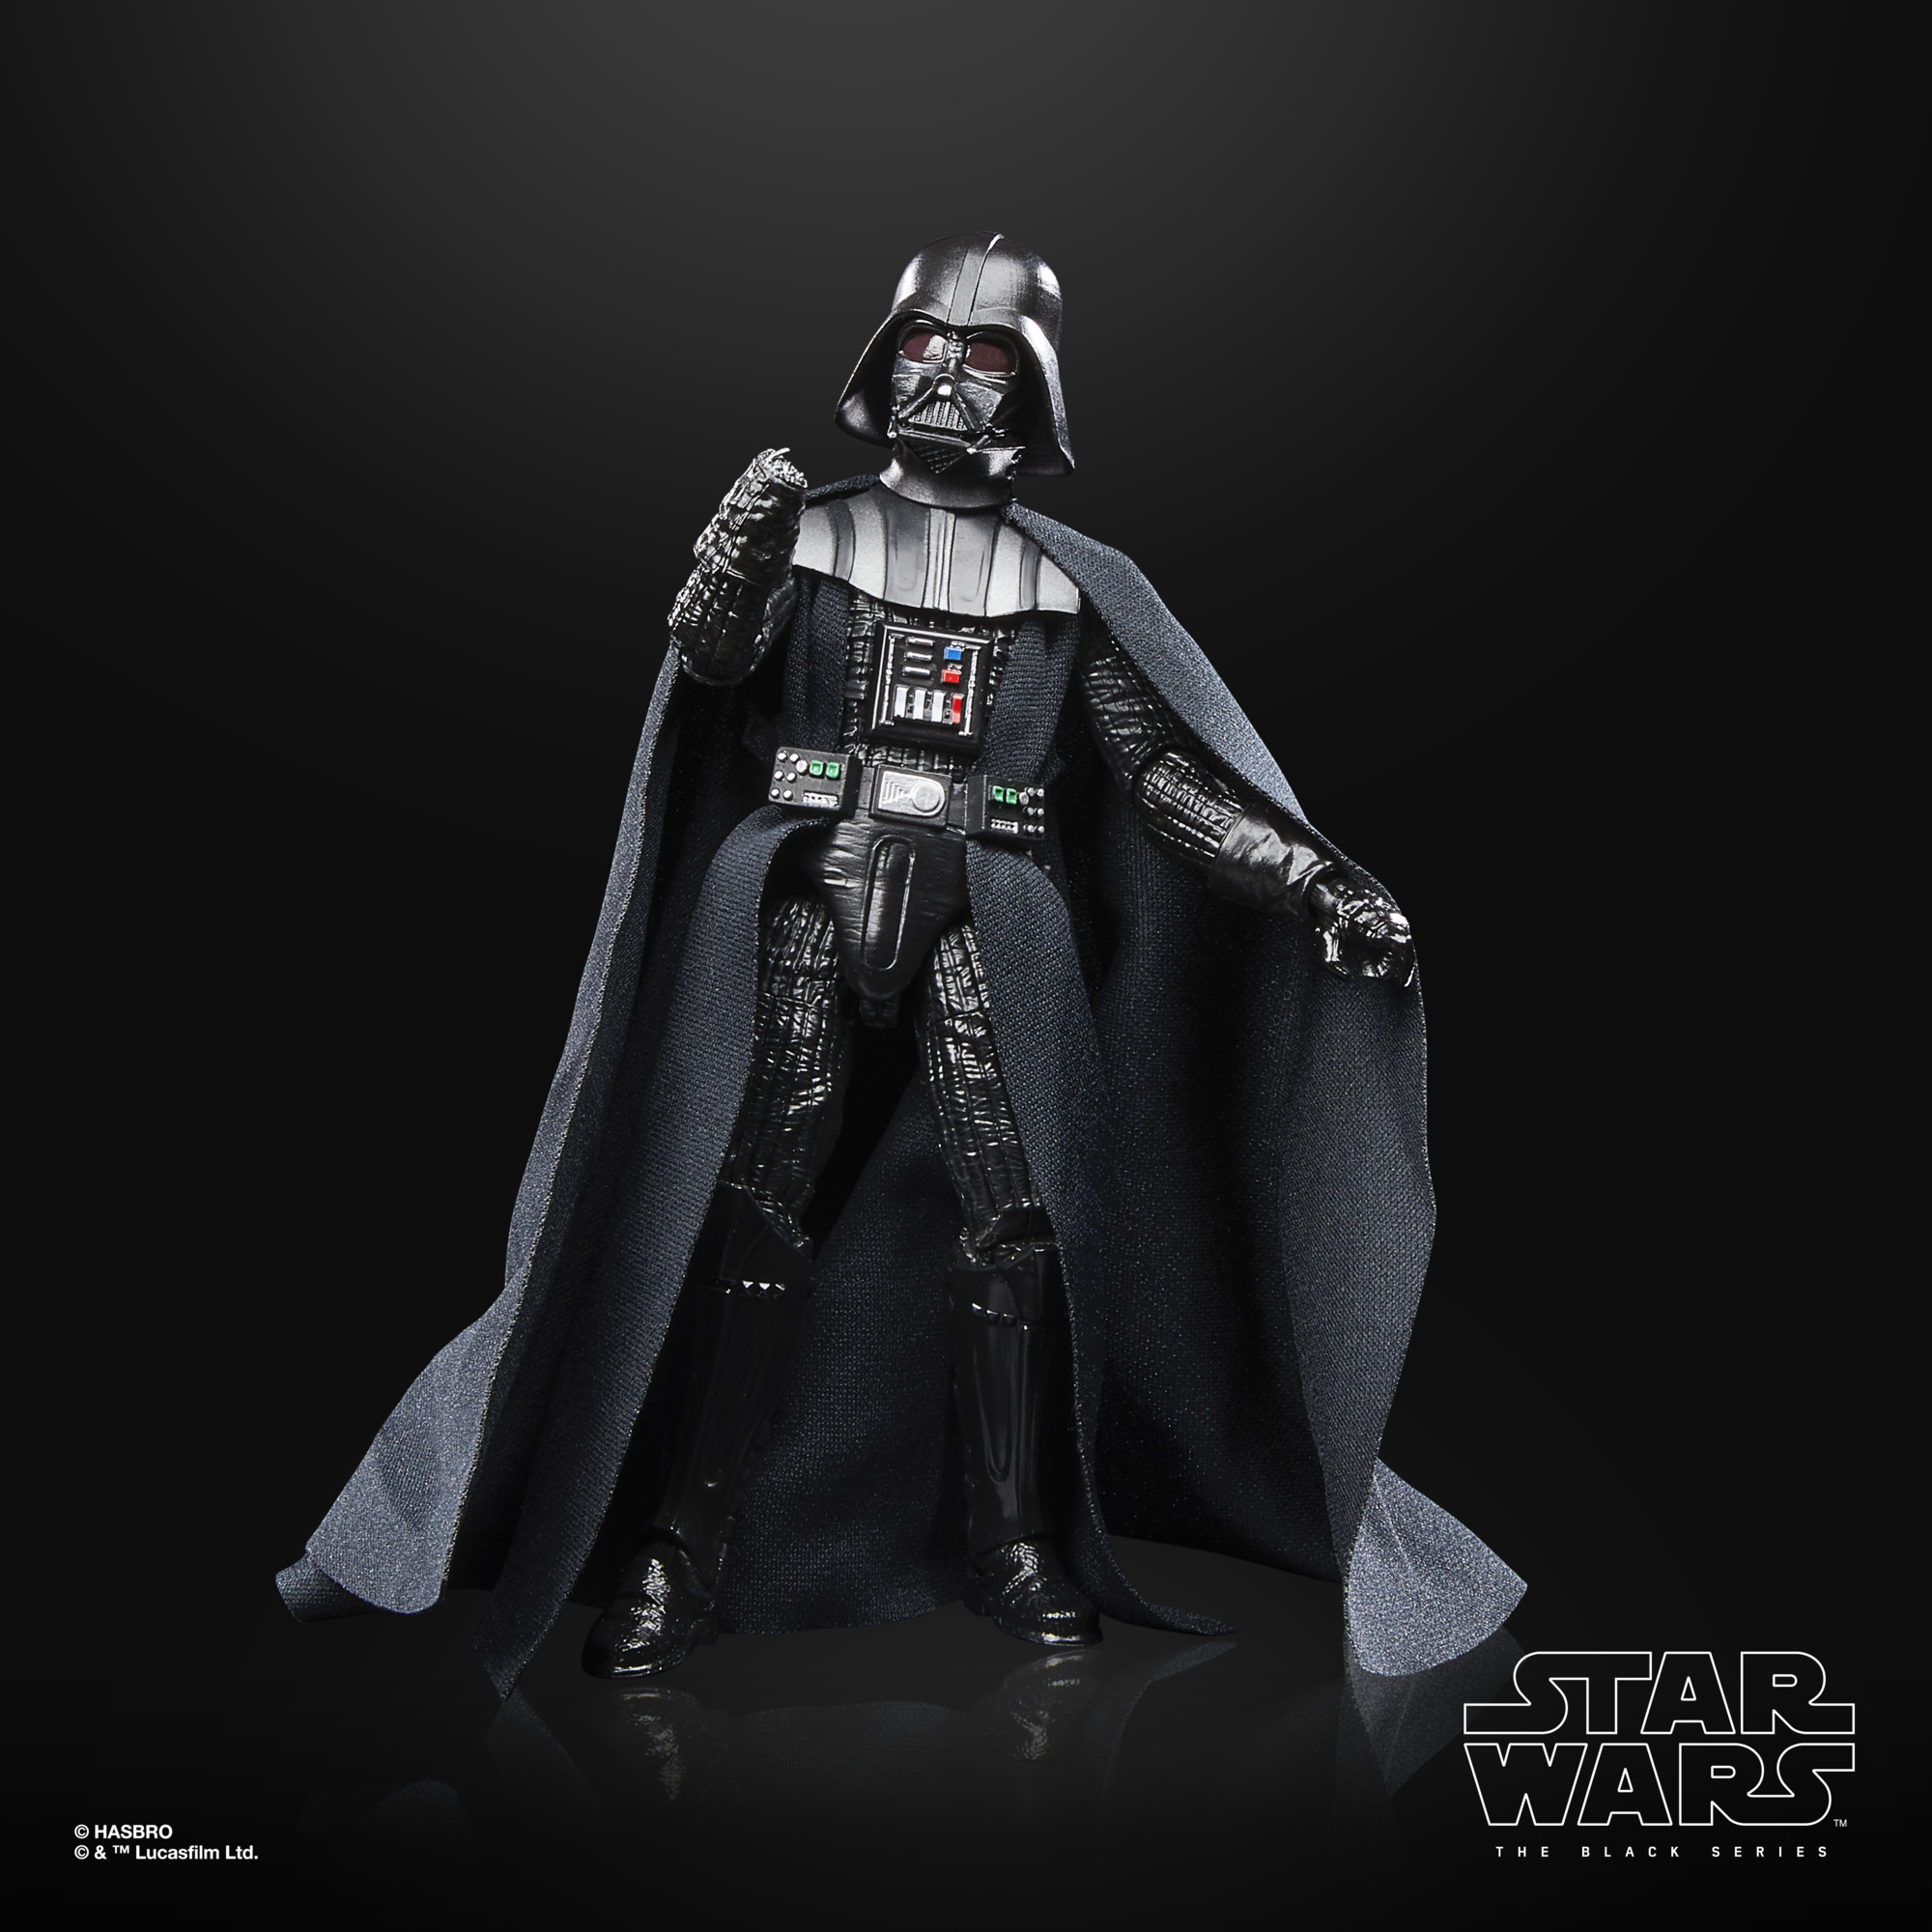  Star Wars The Black Series 40th Anniversary Darth Vader F70825X2 5010996135773